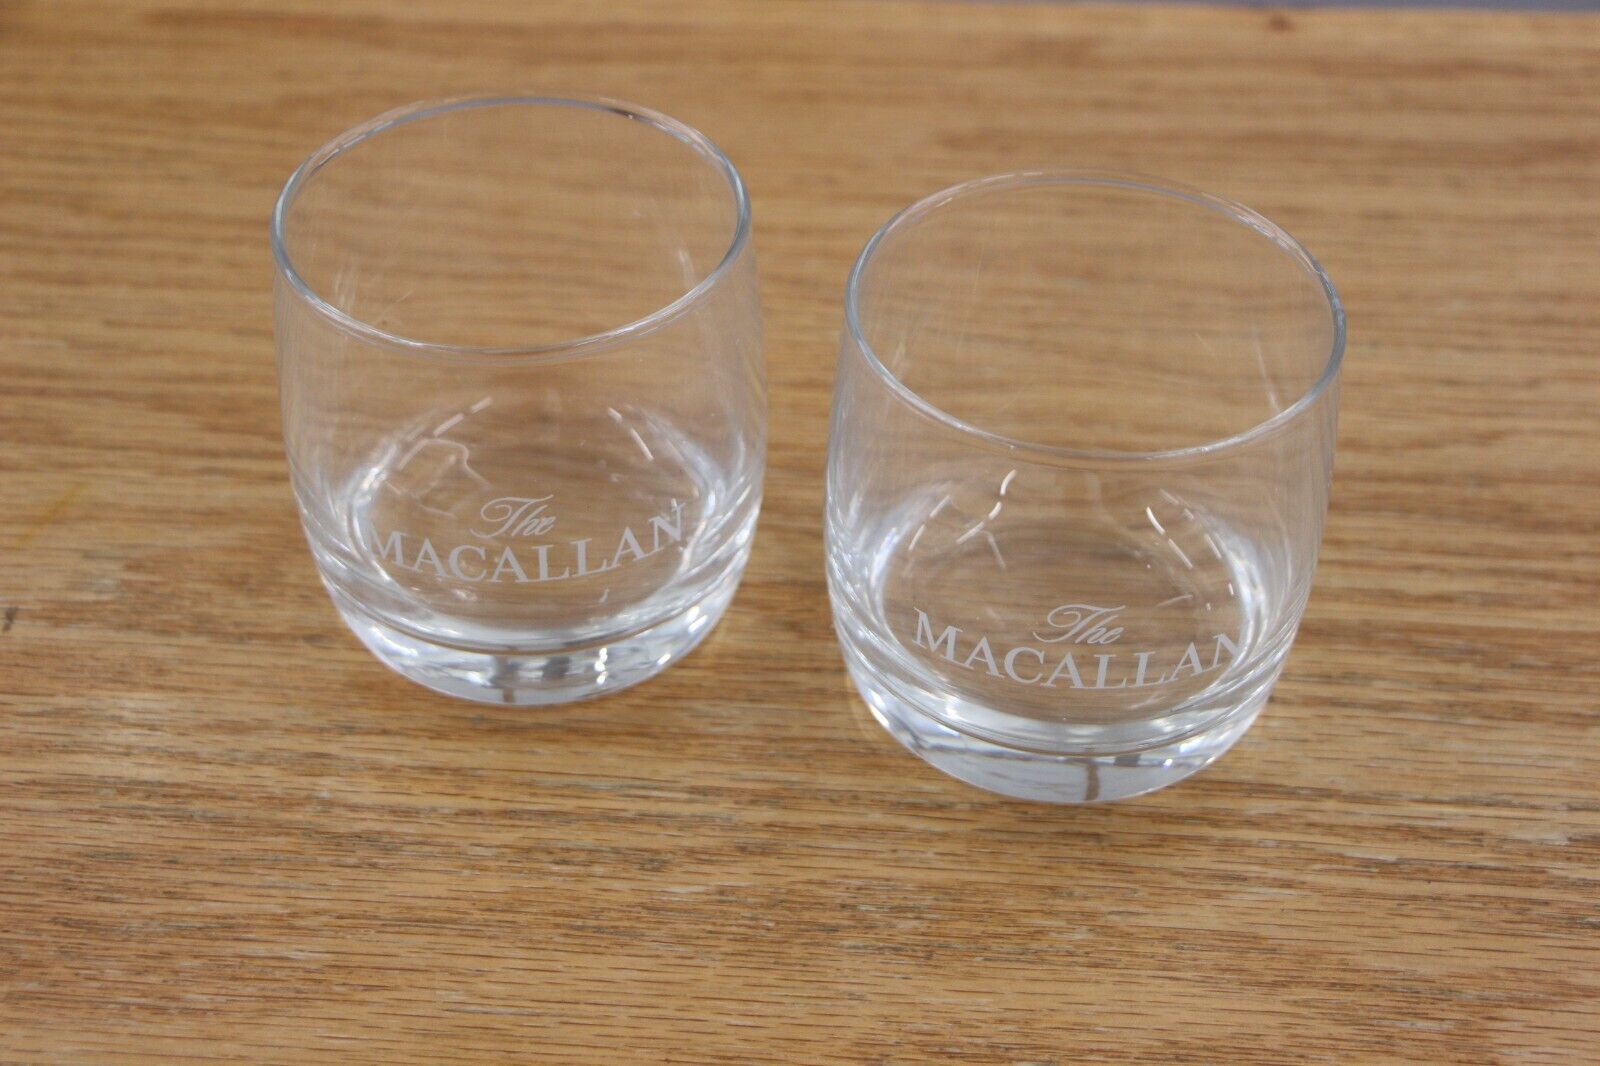 The Macallan Highland Single Malt Scotch Whiskey Tumbler Glass Round Set EUC